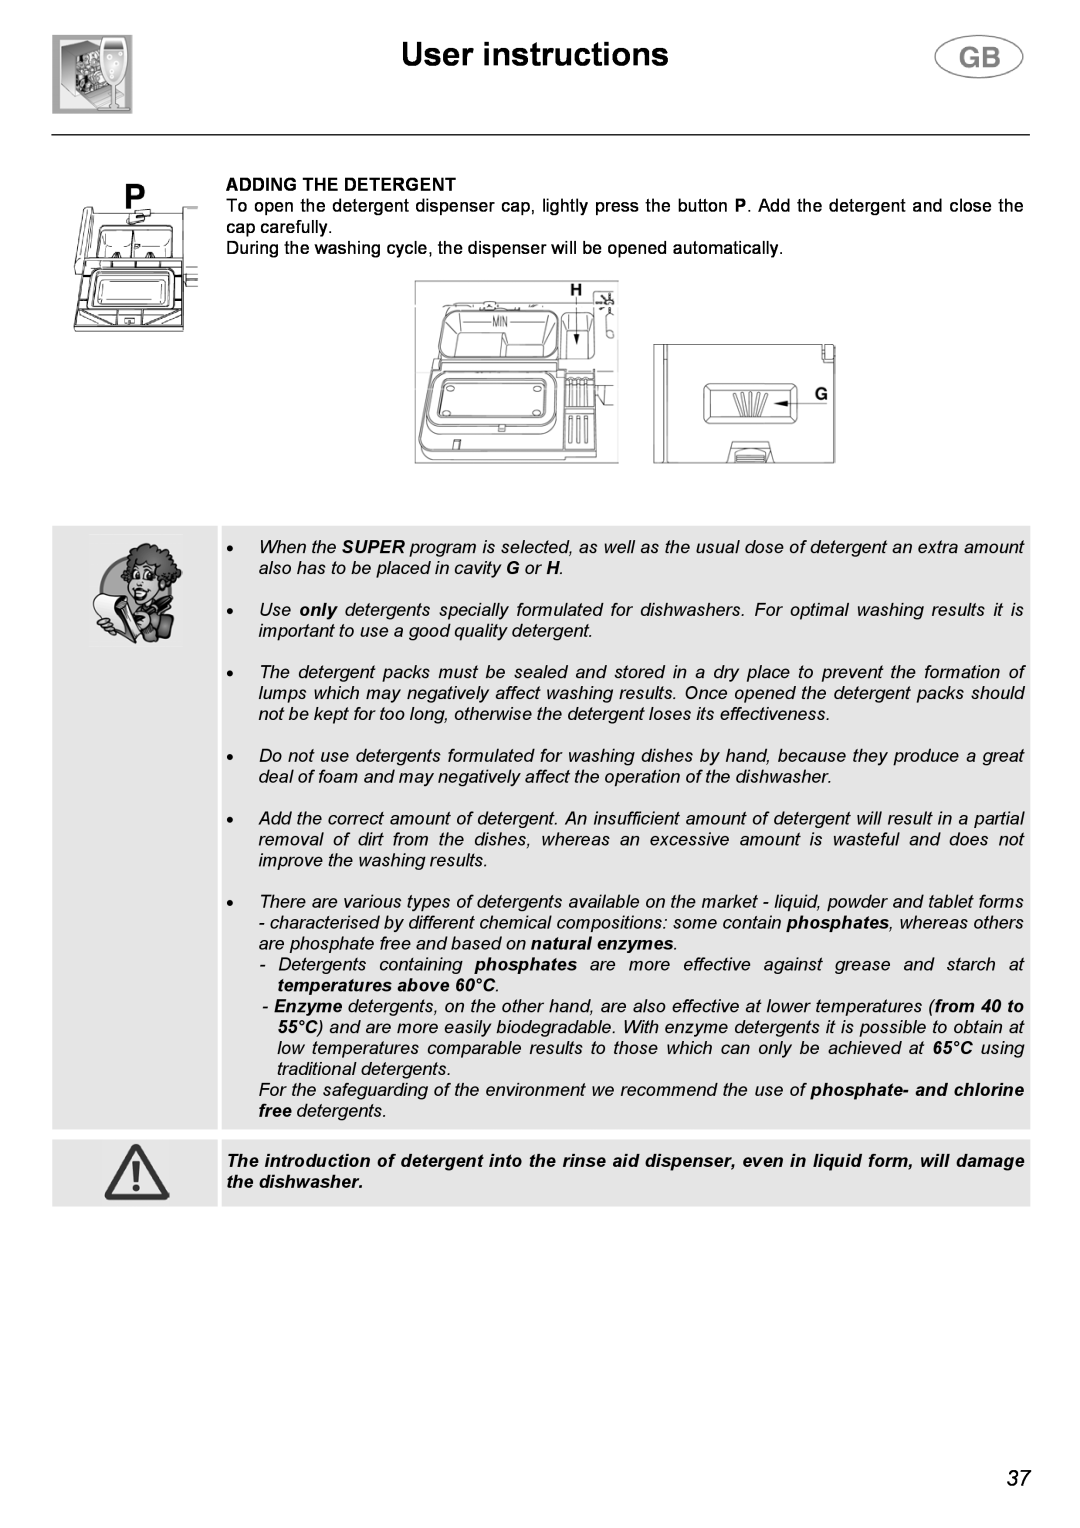 Smeg EL05 instruction manual User instructions, Adding The Detergent 